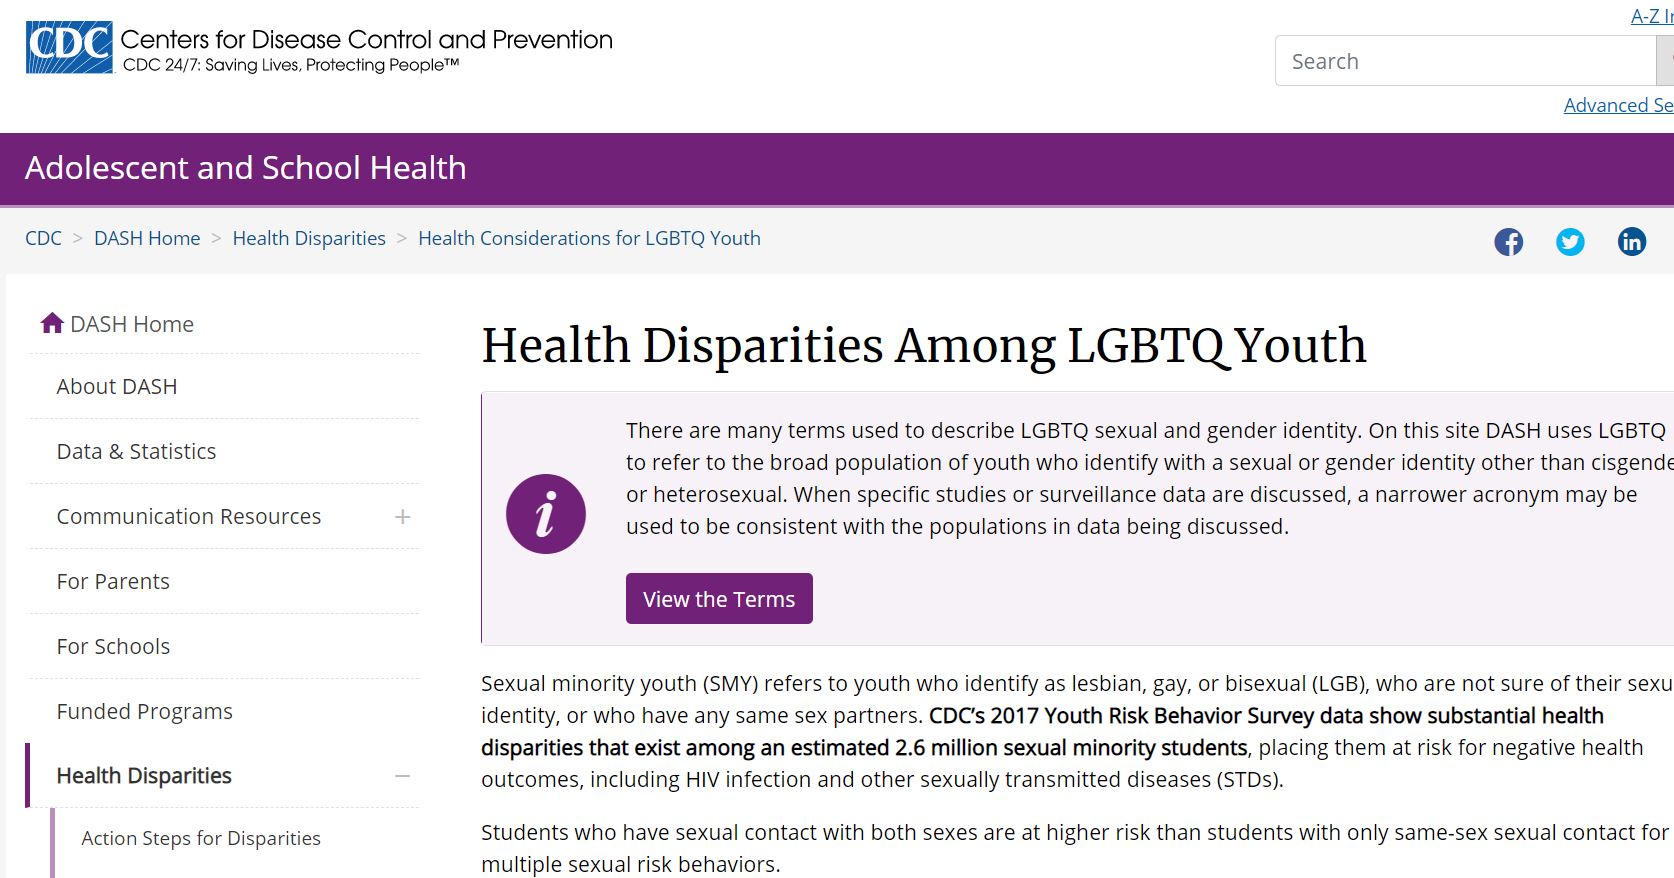 CDC: Health Disparities Among LGBTQ Youth